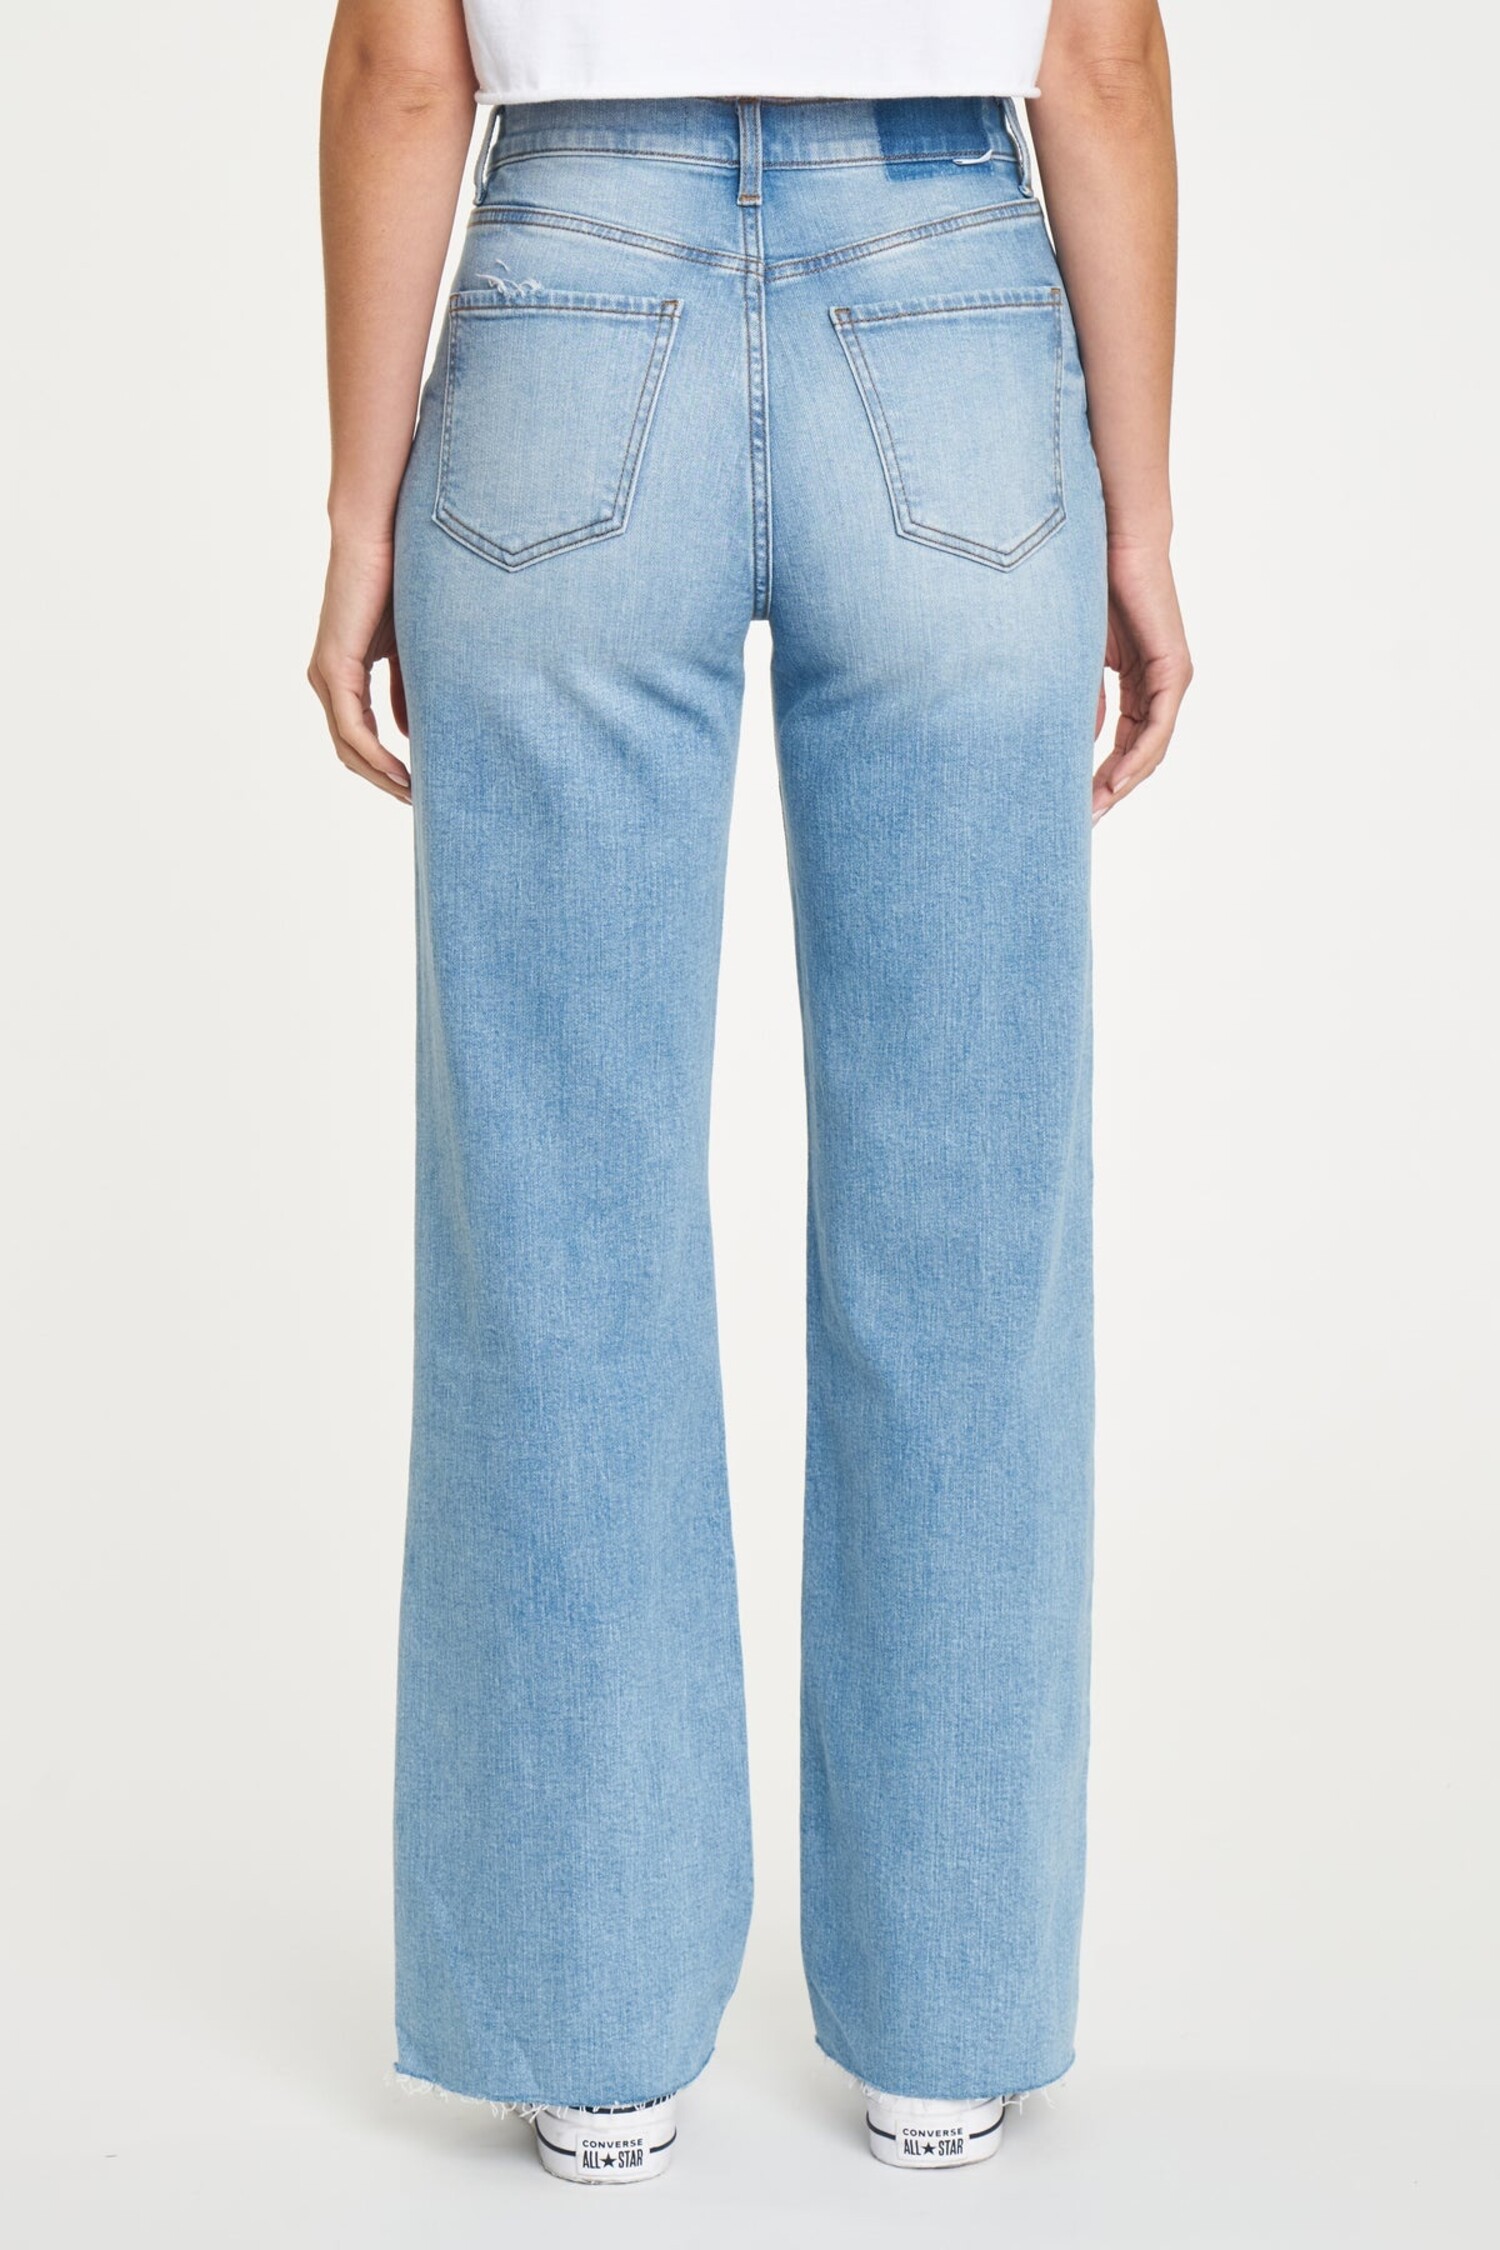 https://cdn.shoplightspeed.com/shops/613188/files/57366184/1500x4000x3/daze-womens-far-out-in-jeans-cheeky.jpg